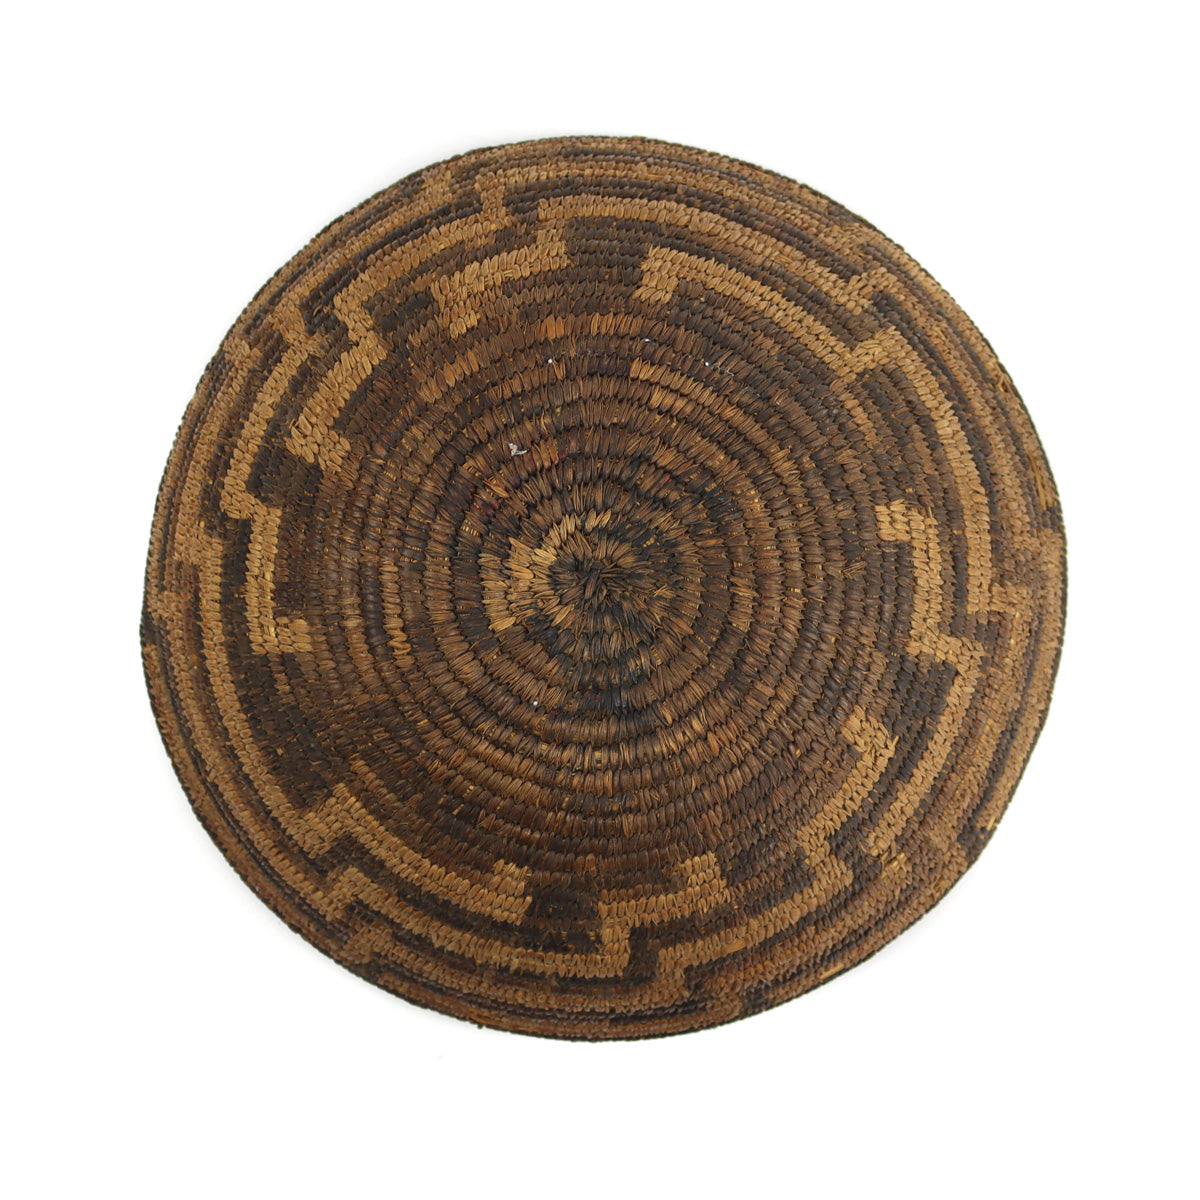 Tohono O'odham Basket with Geometric Design c. 1900s, 4.5" x 13.25" (SK3330) 4